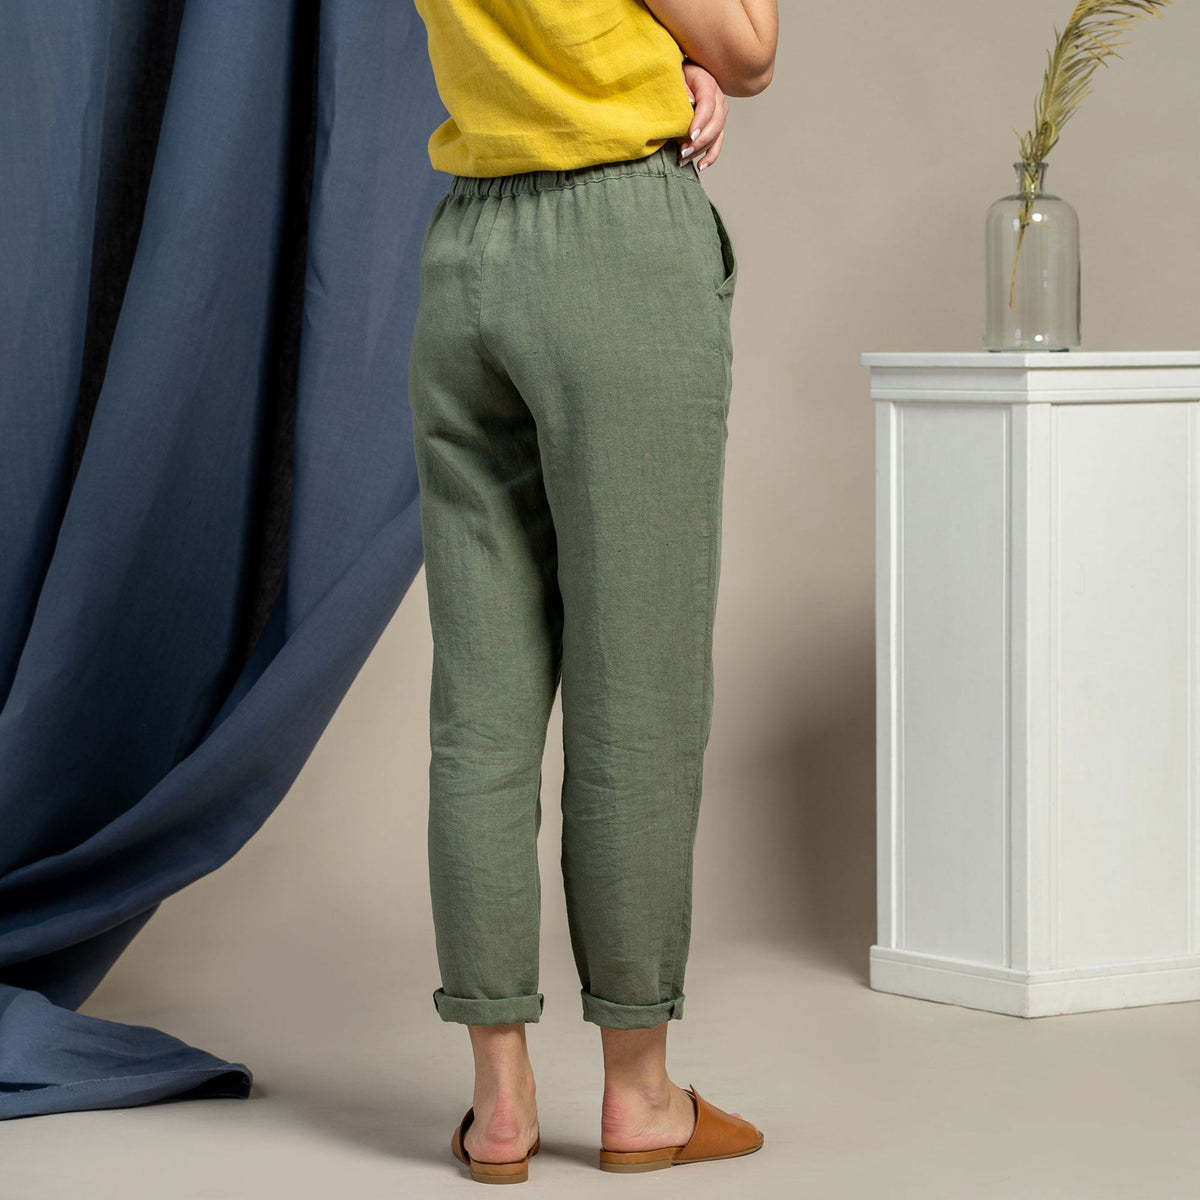 MENIQUE 100% Linen Pants Dakota Stone Green